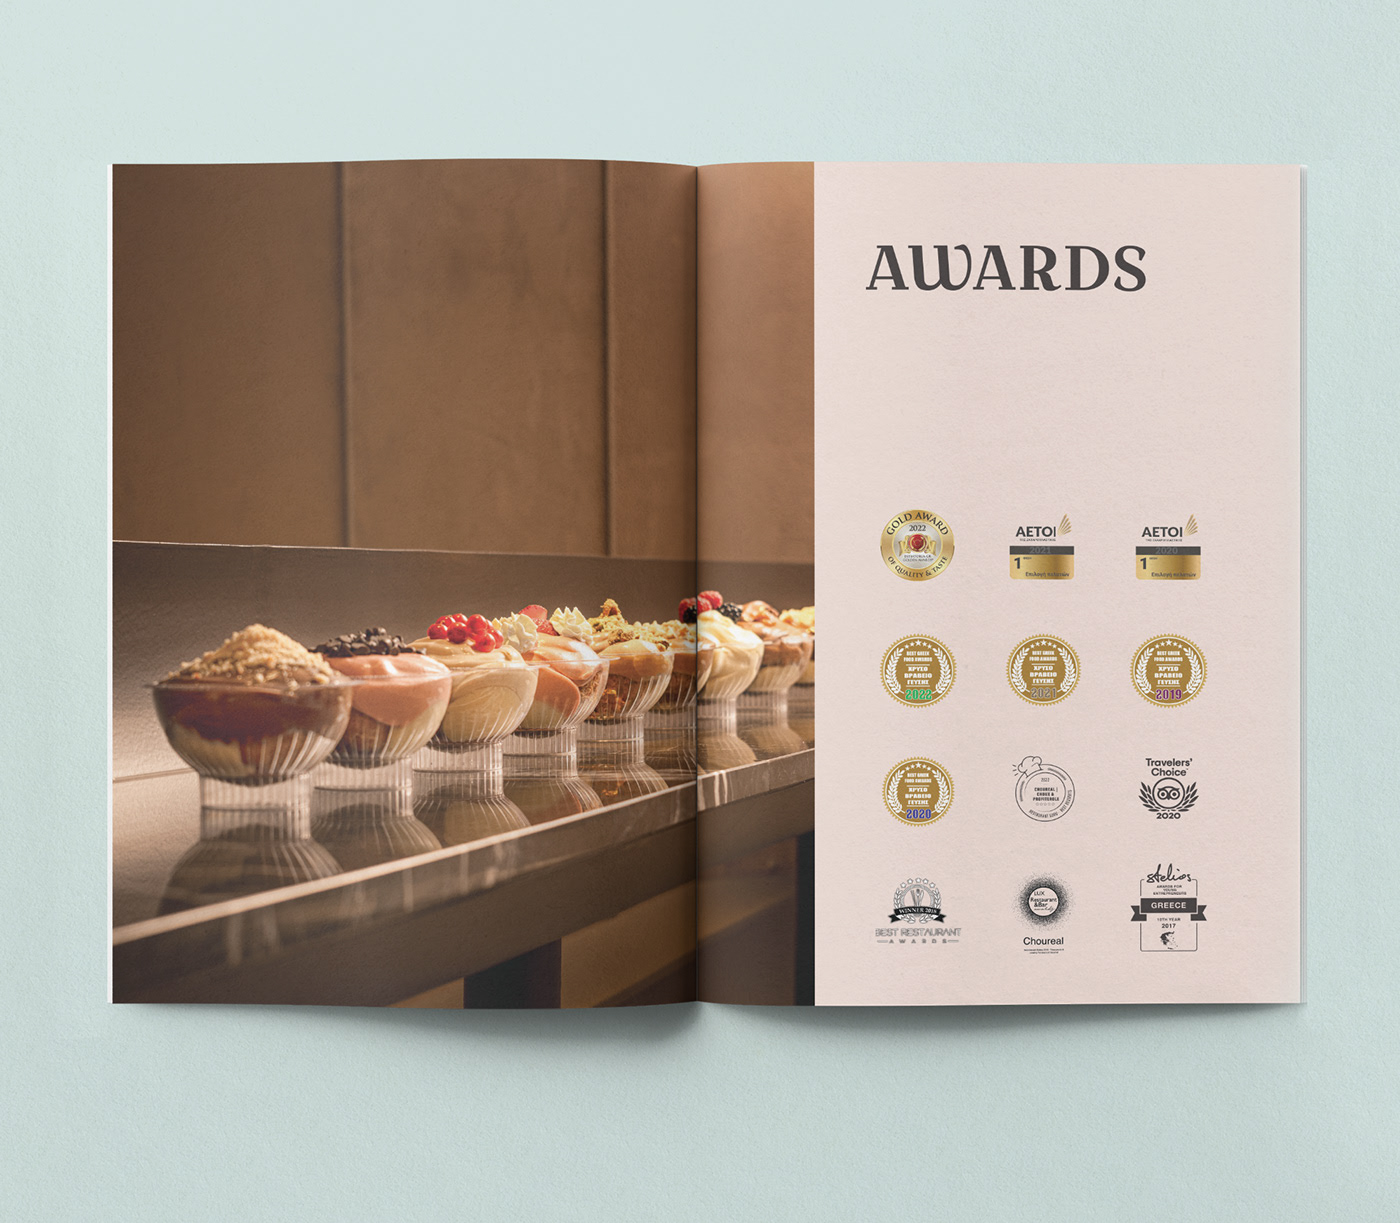 choureal lookbook spread about awards